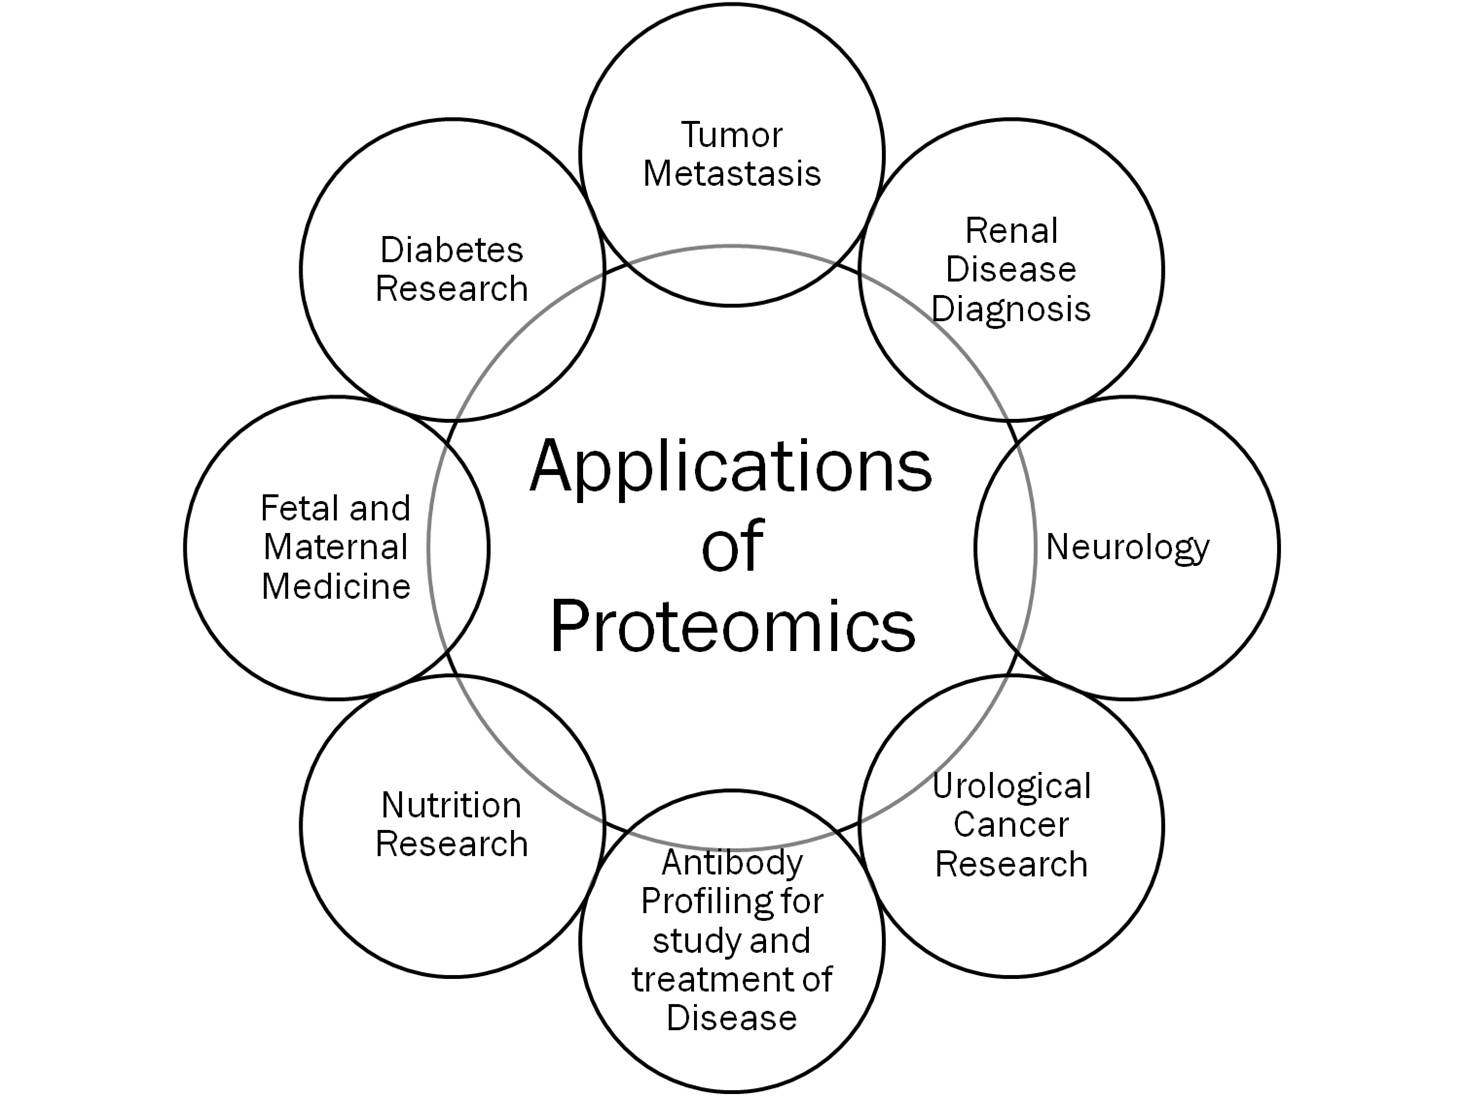 Application of Proteomics